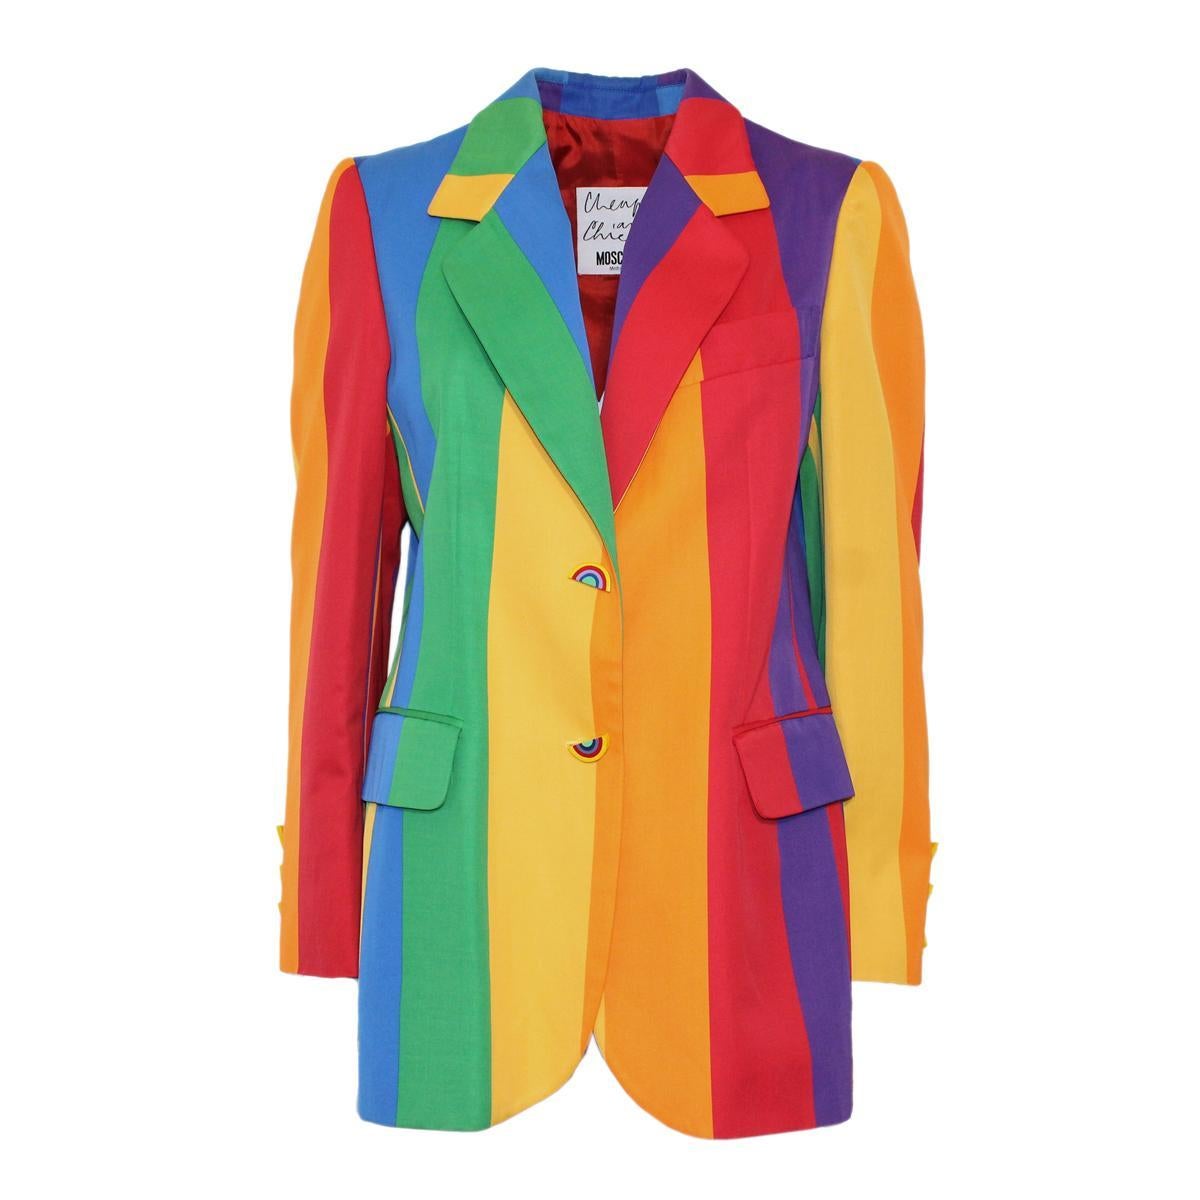 Rare & Iconic Moschino Rainbow Jacket